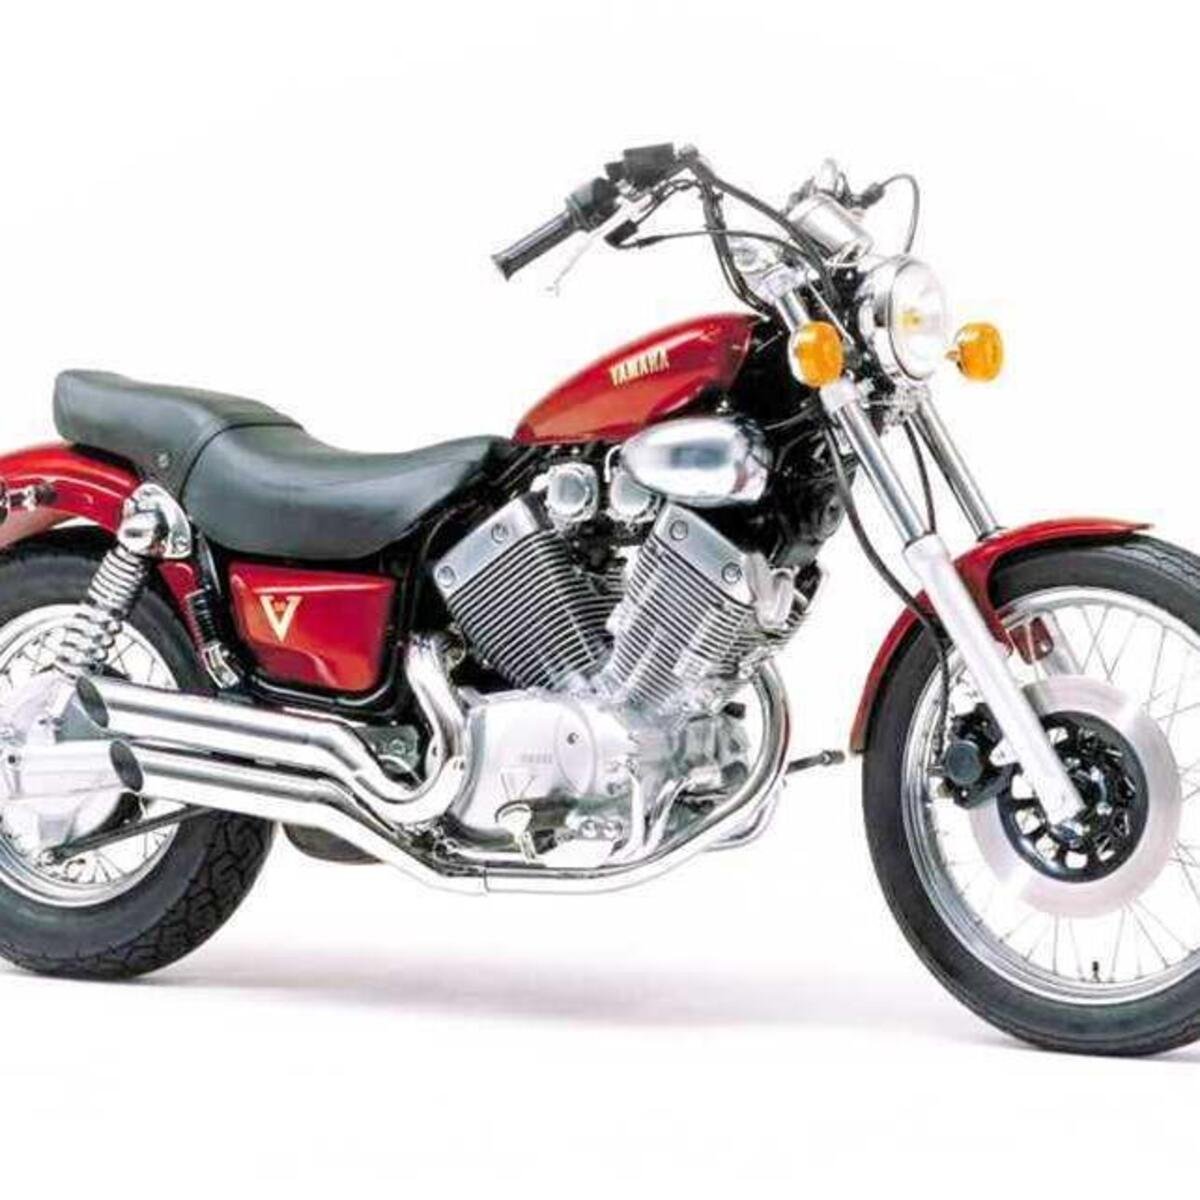 Yamaha XV 535 (1988 - 97)